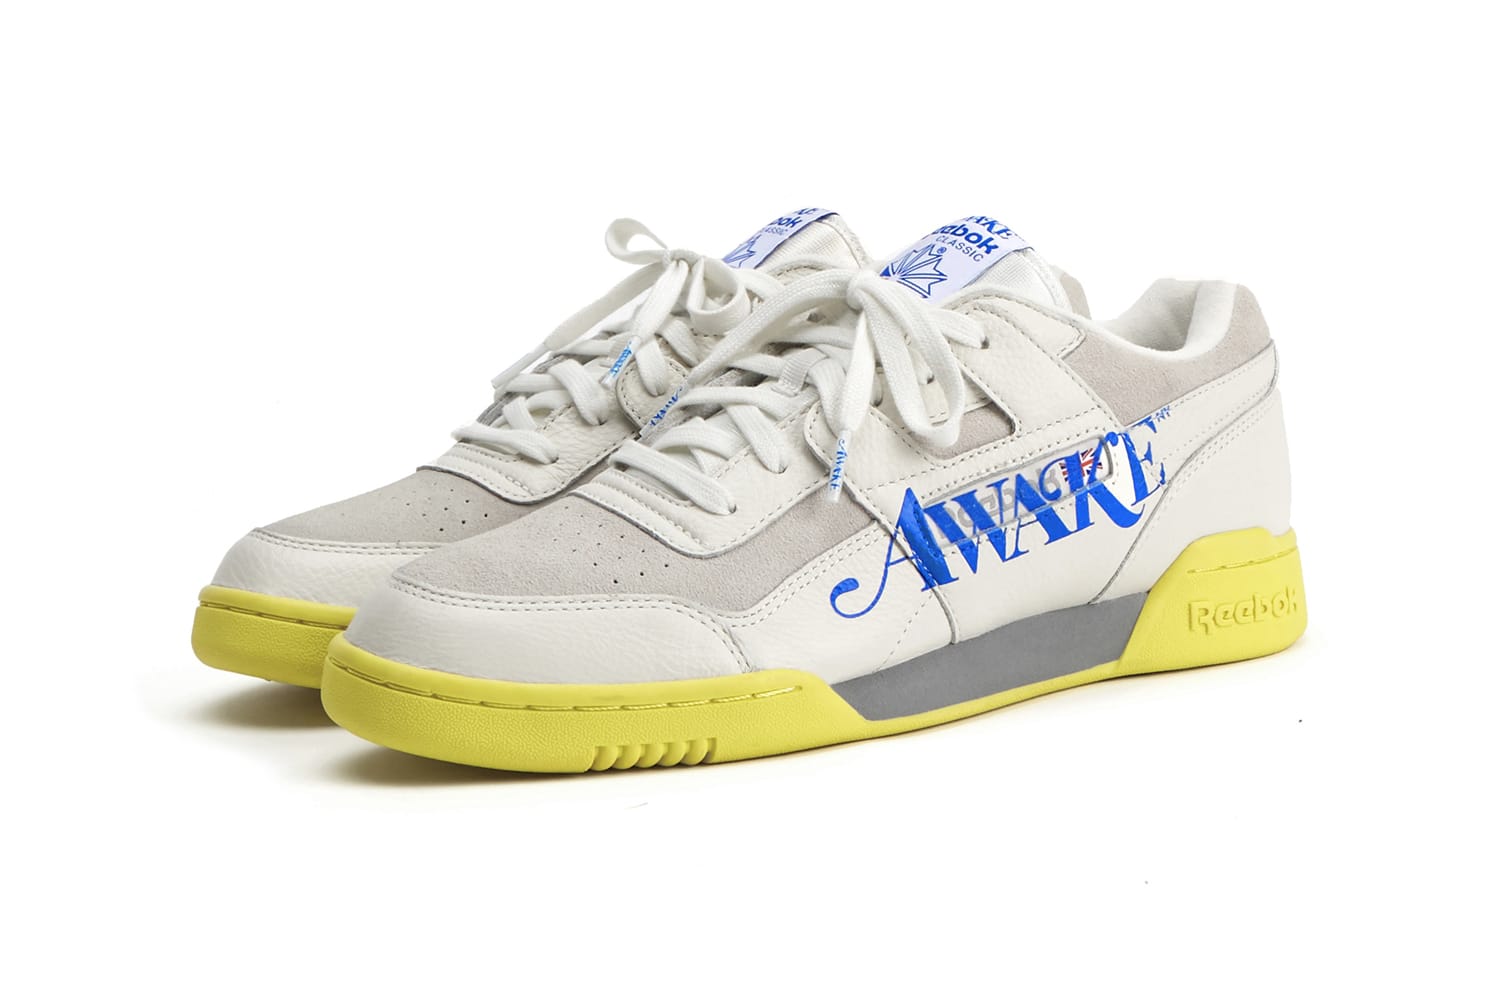 Awake NY x Reebok Classics Footwear 